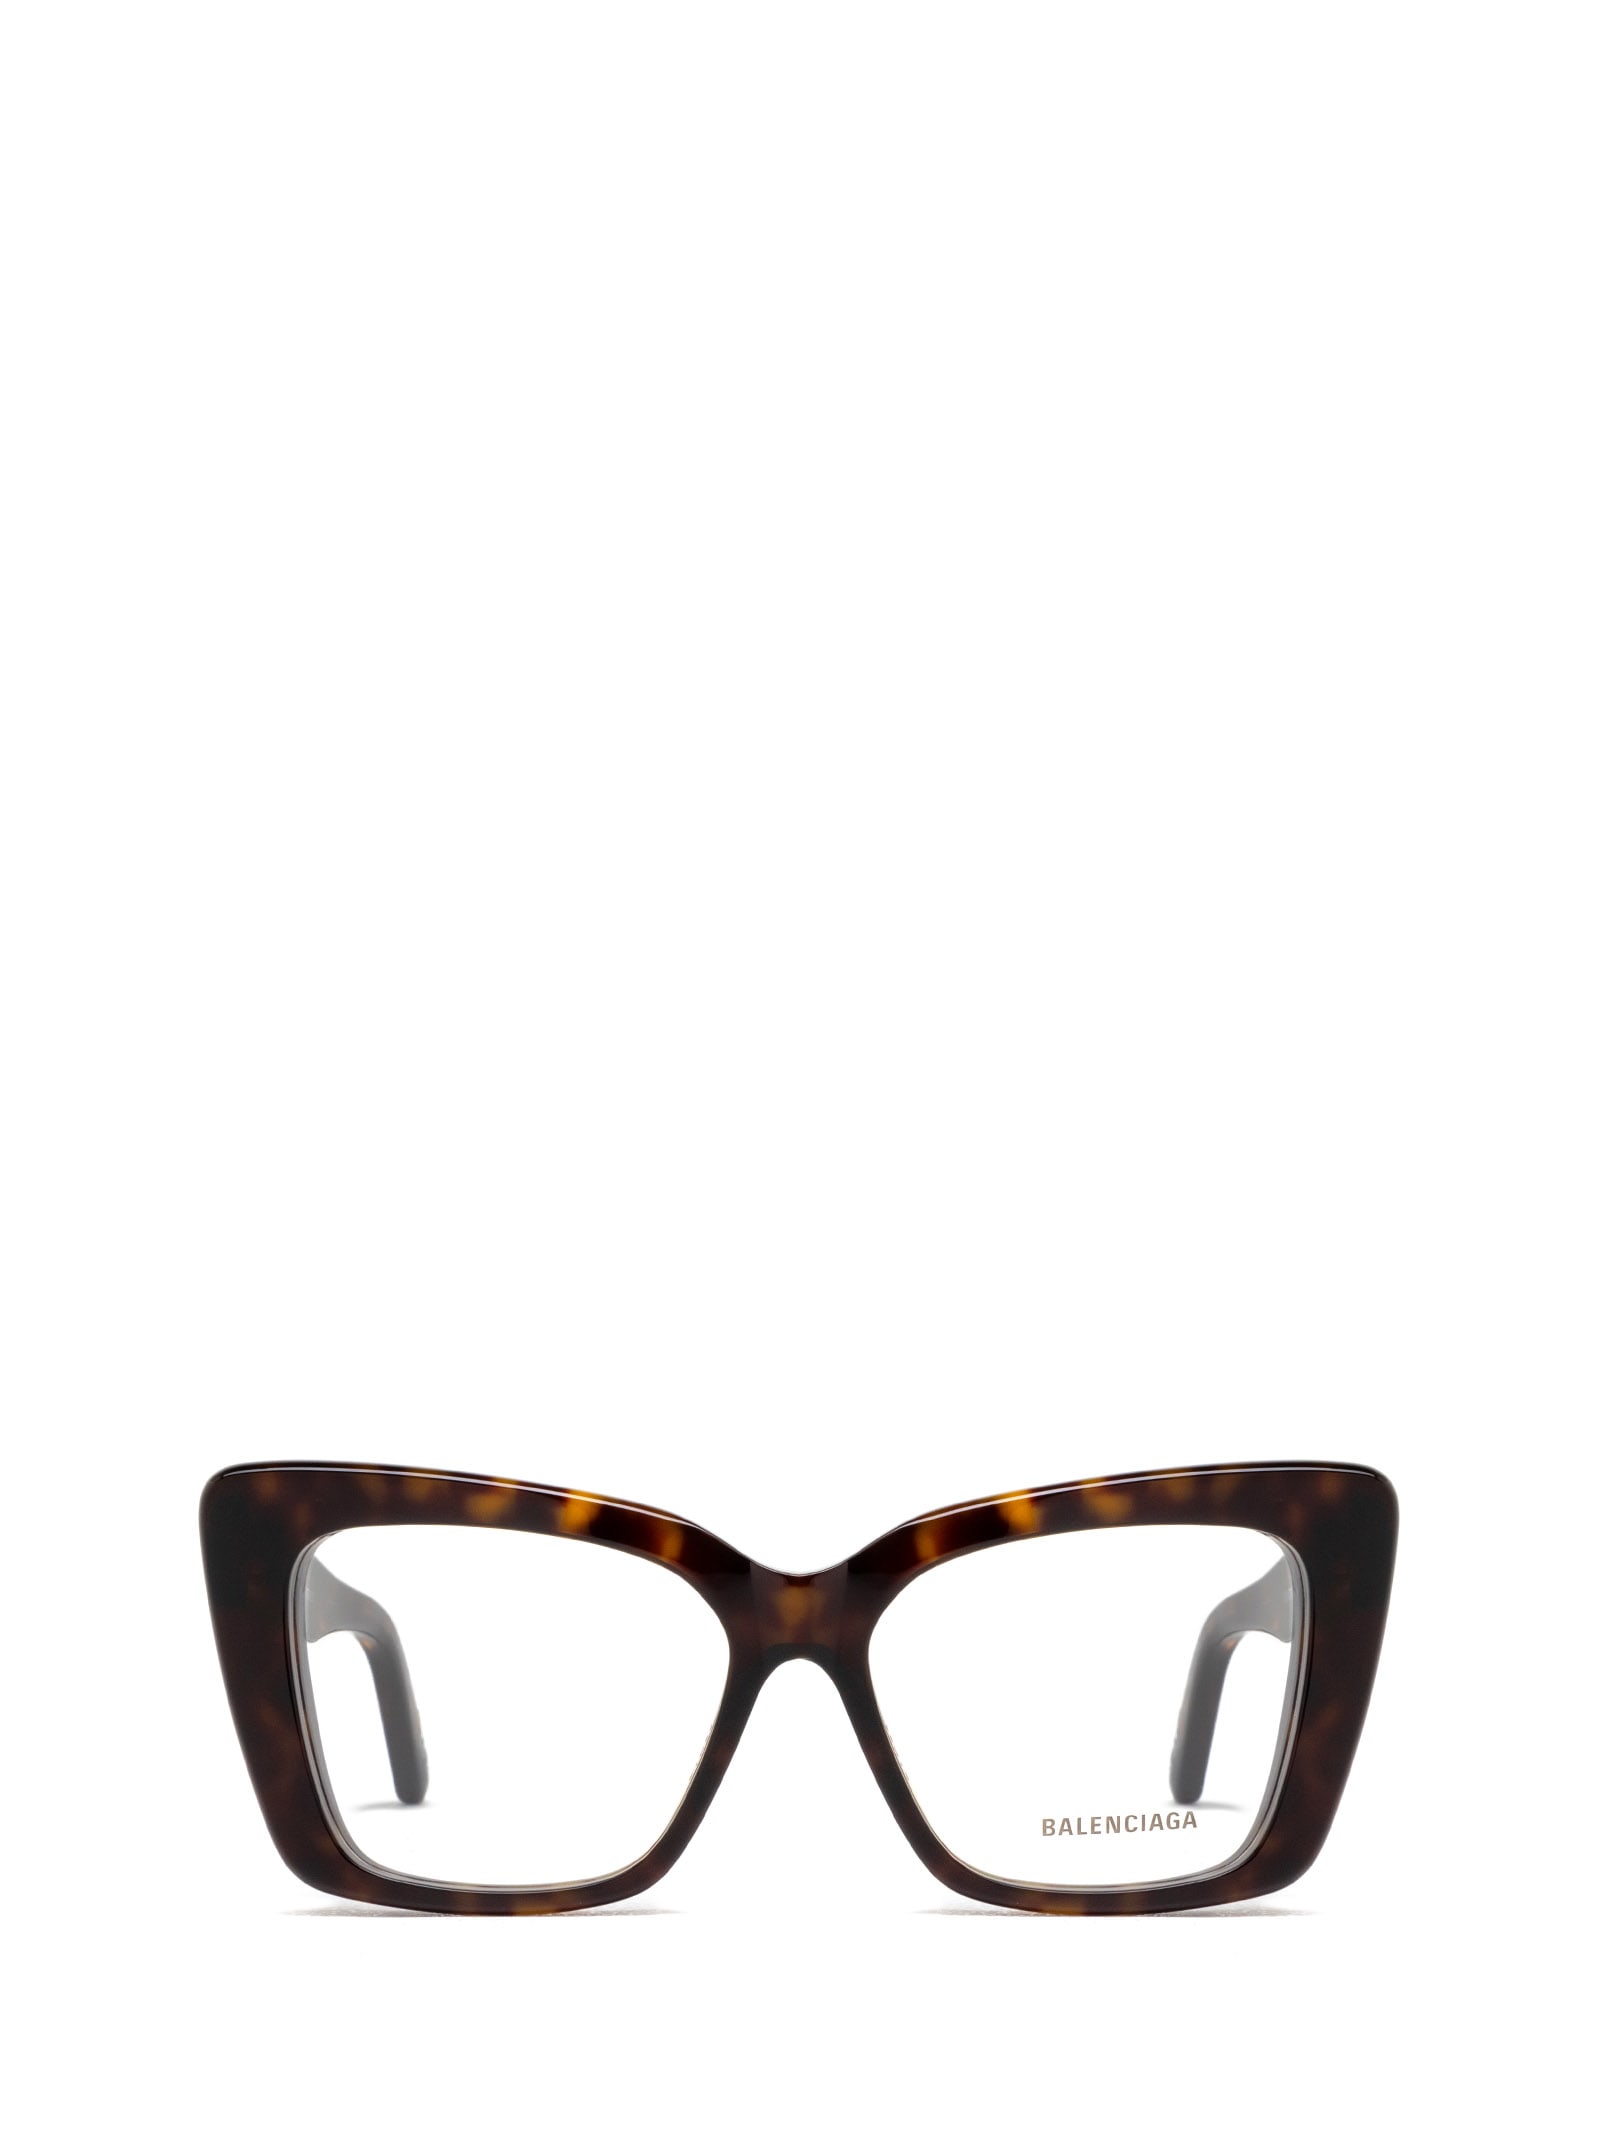 Balenciaga Eyewear Glasses